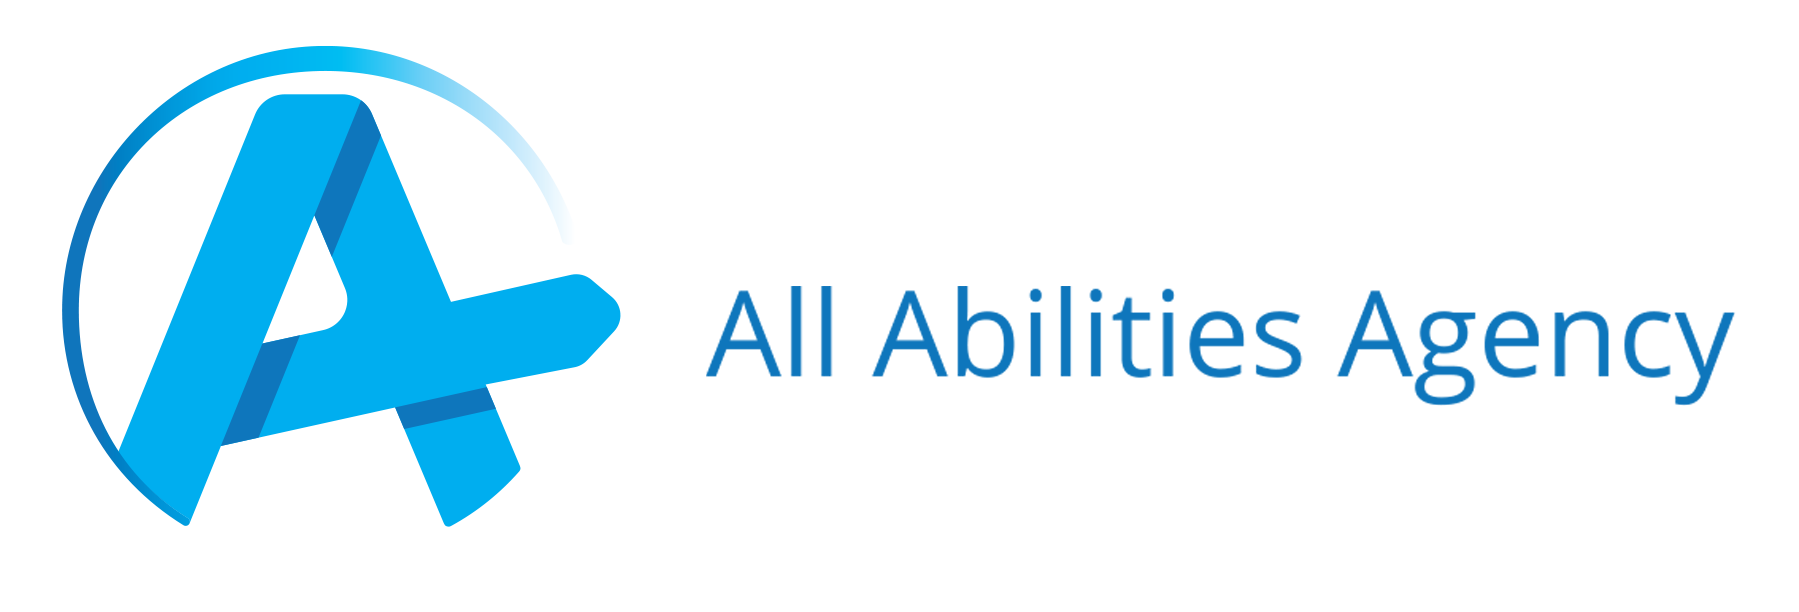 All Abilities Agency Logo